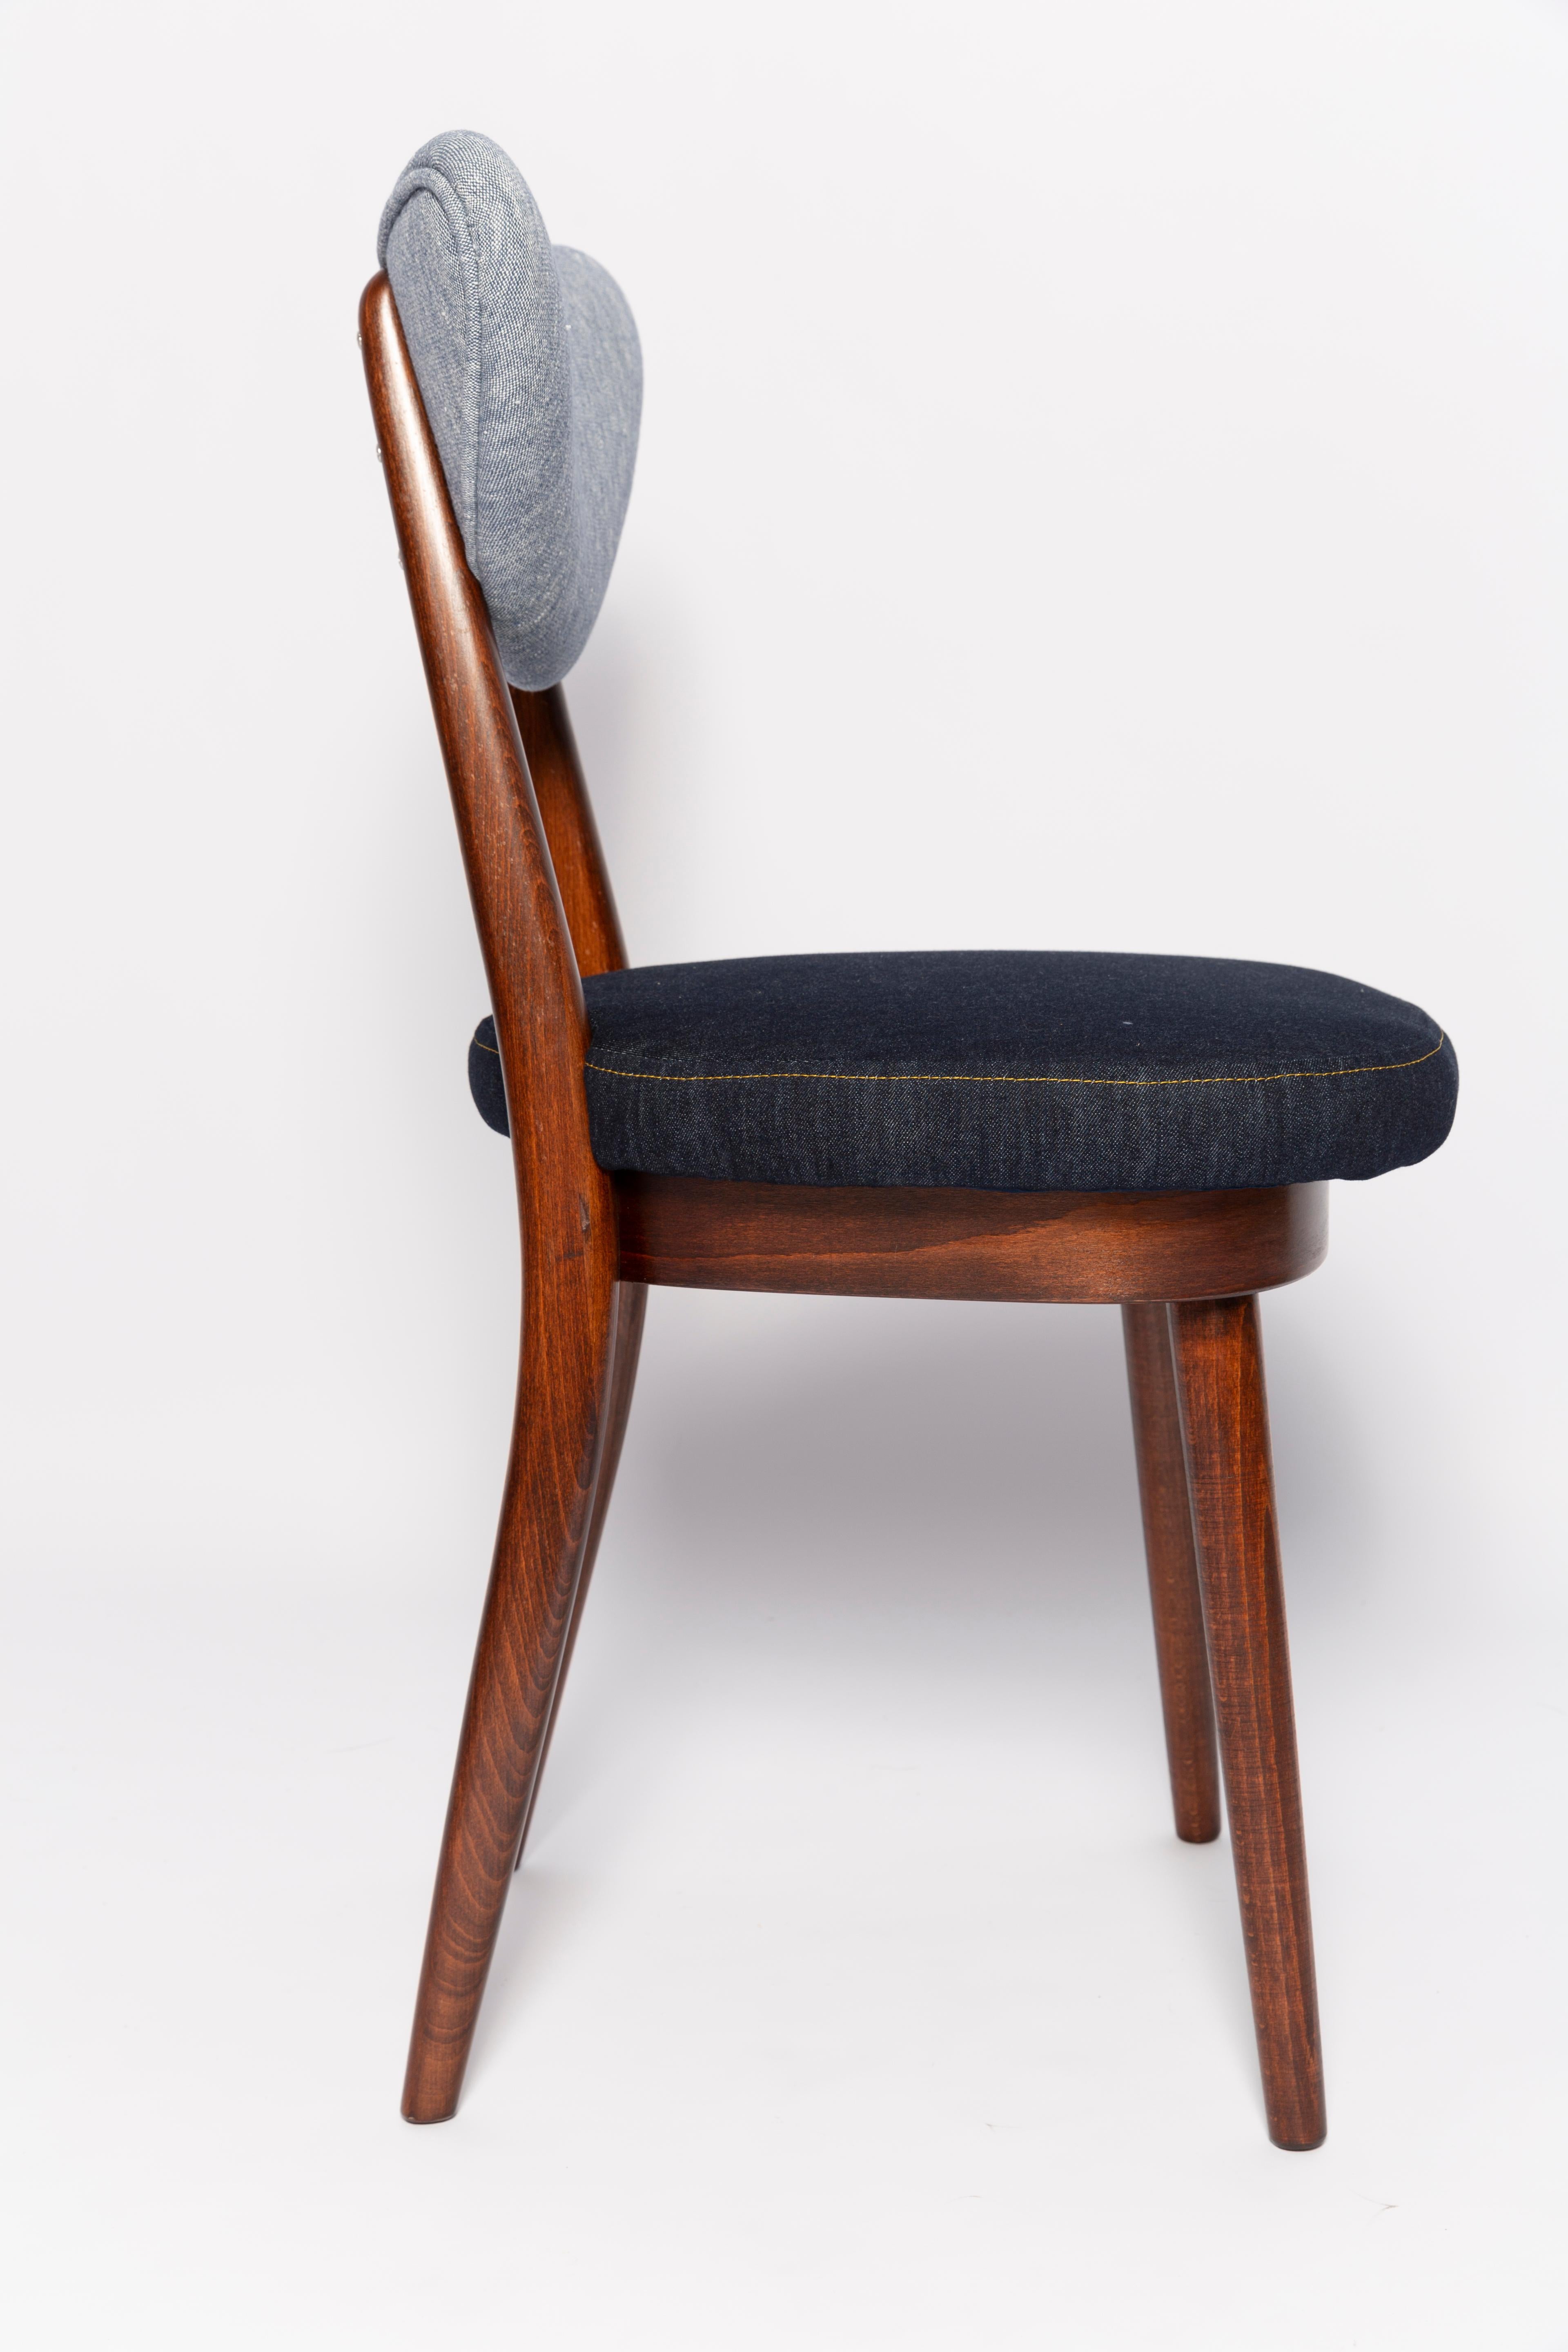 20th Century Midcentury Light and Dark Blue Denim Heart Chair, Europe, 1960s For Sale